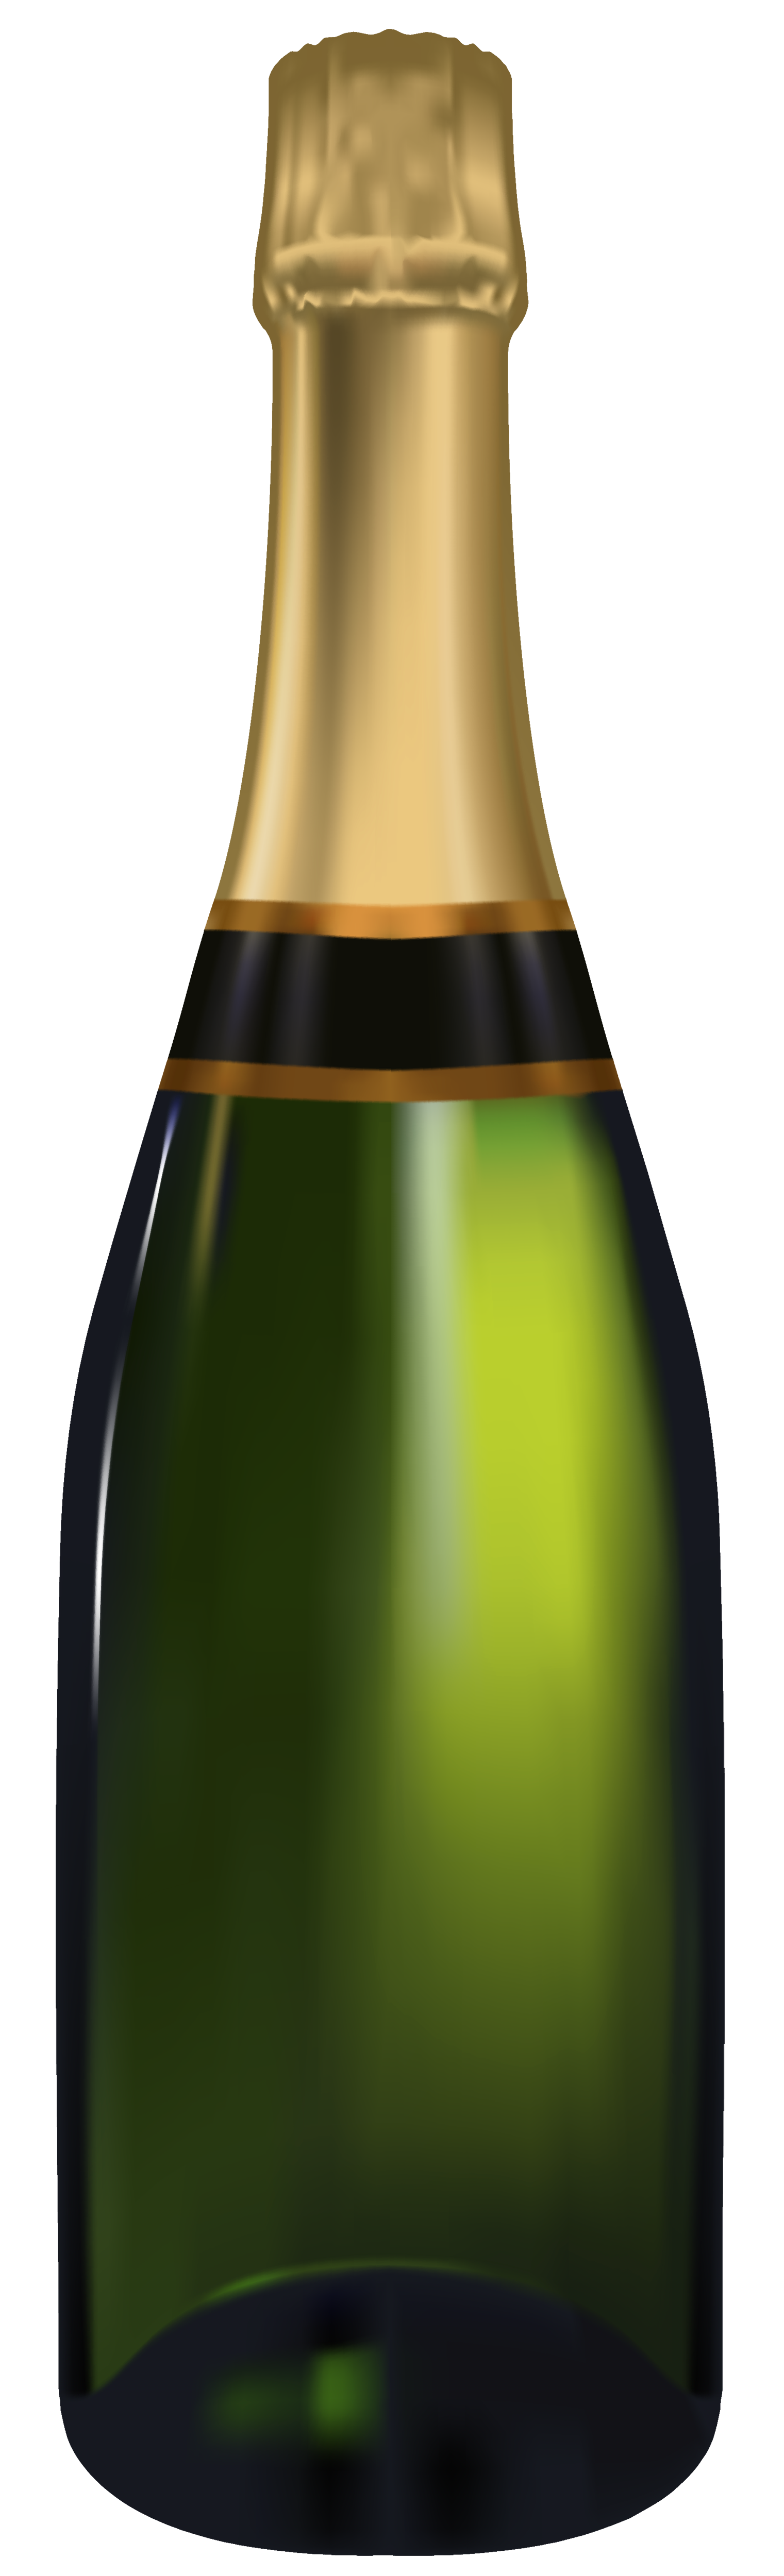 Champagne Bottle PNG Transparent Images Free Download